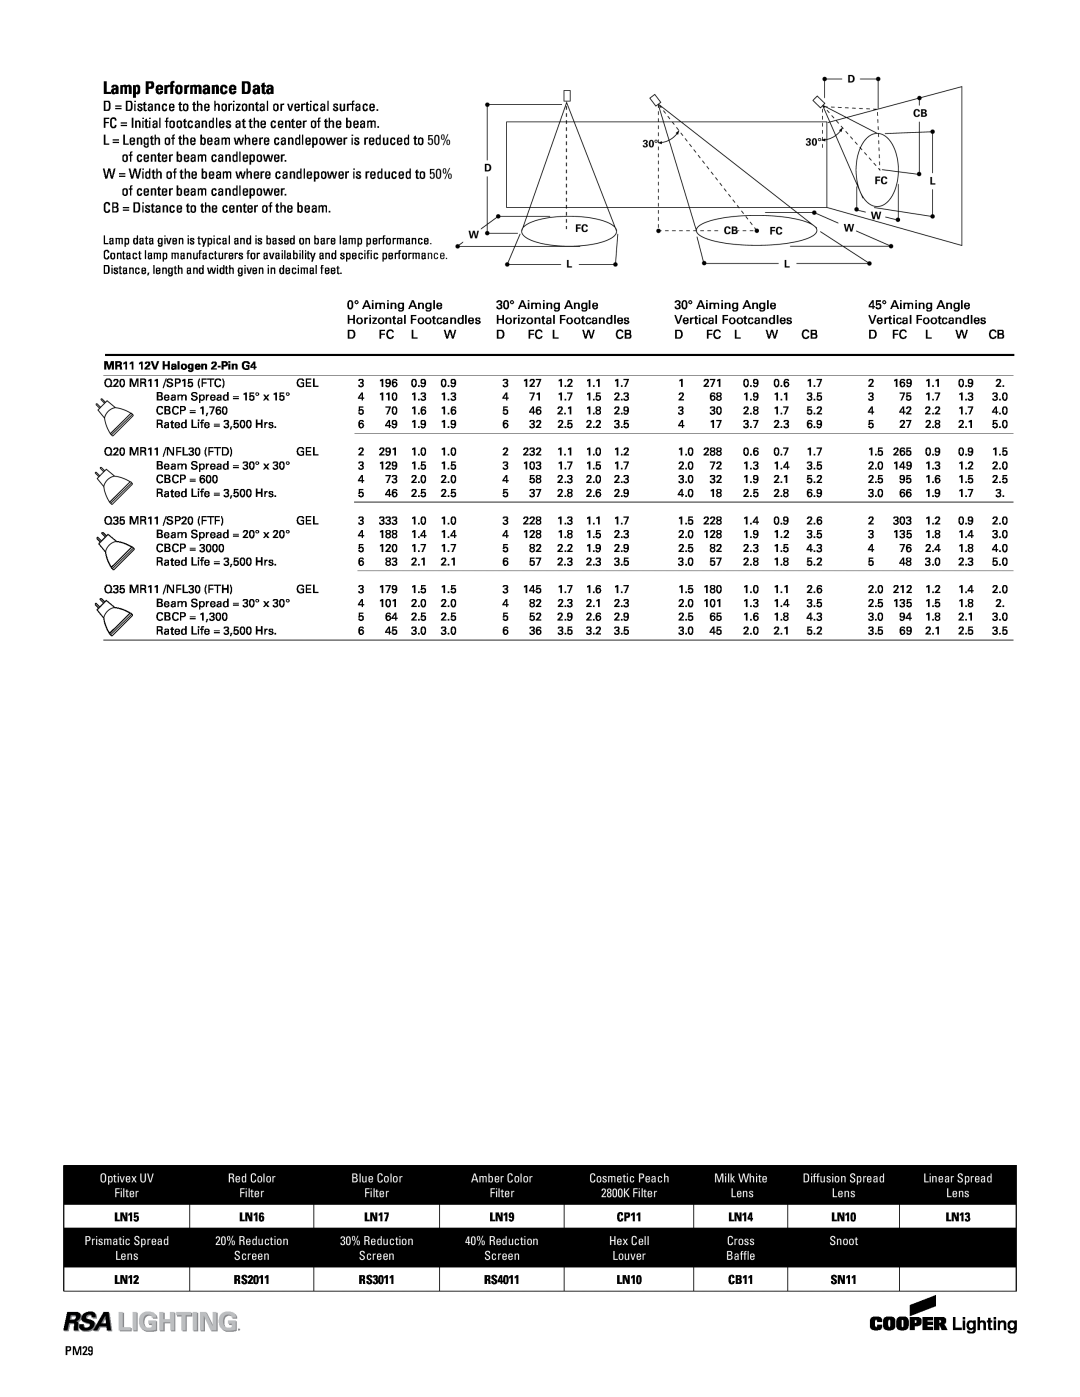 Cooper Lighting PM211cbi, PM611cbi, PM411cbi, PM111cbi specifications Lamp Performance Data 